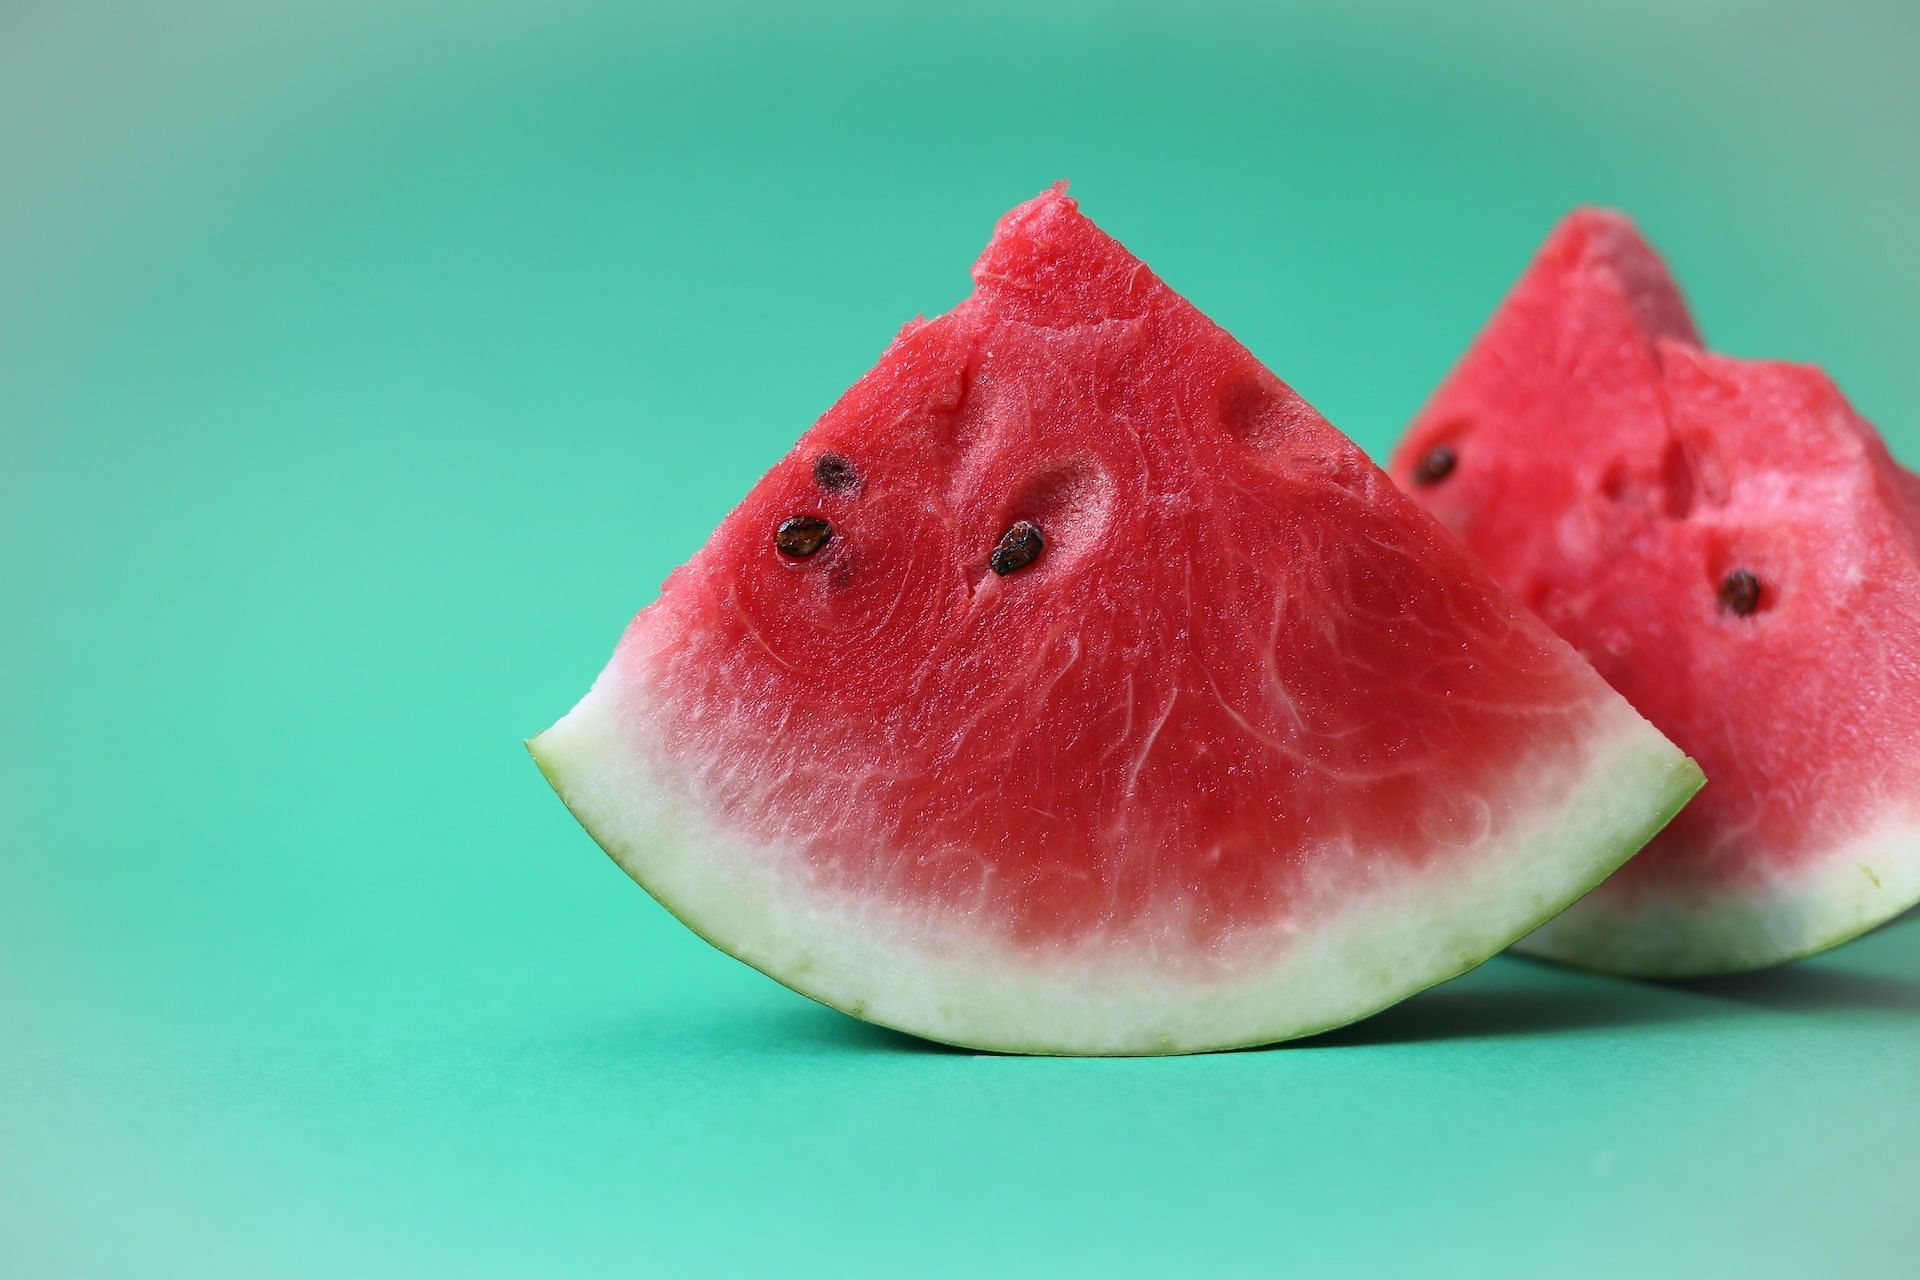 Watermelon (Photo by Sahand Babali on Unsplash)